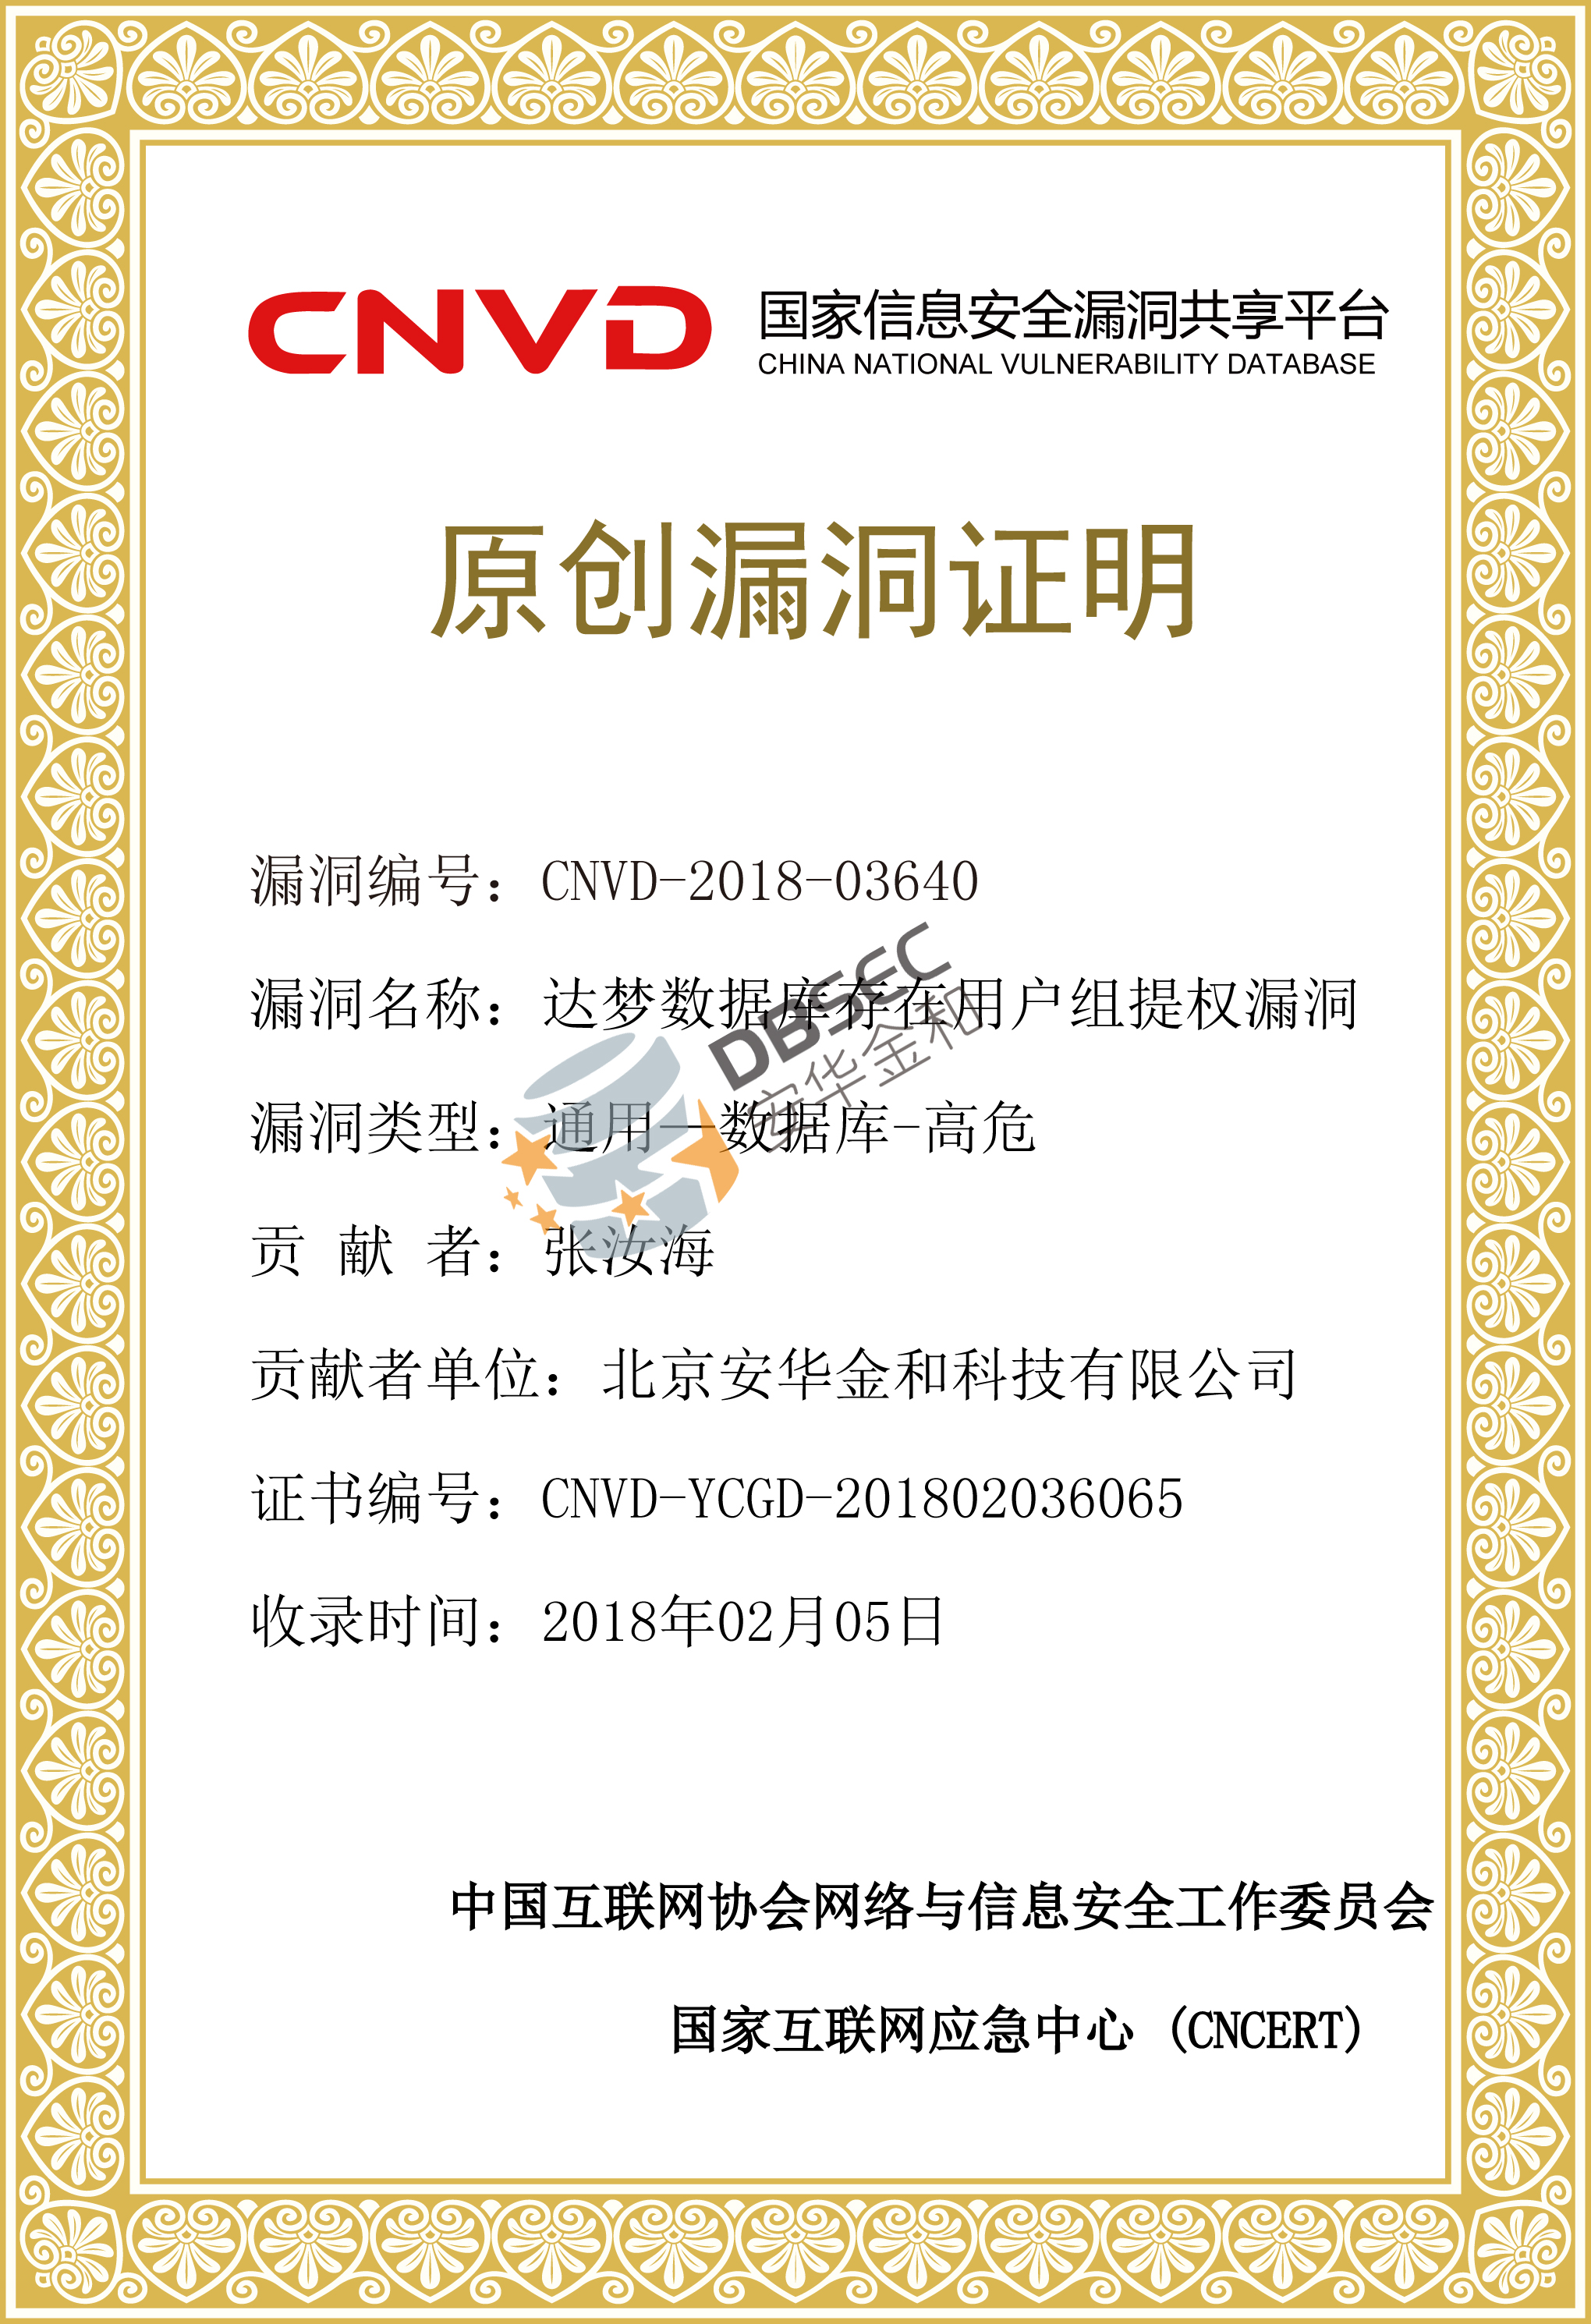 CNVD-YCGD-201802036065